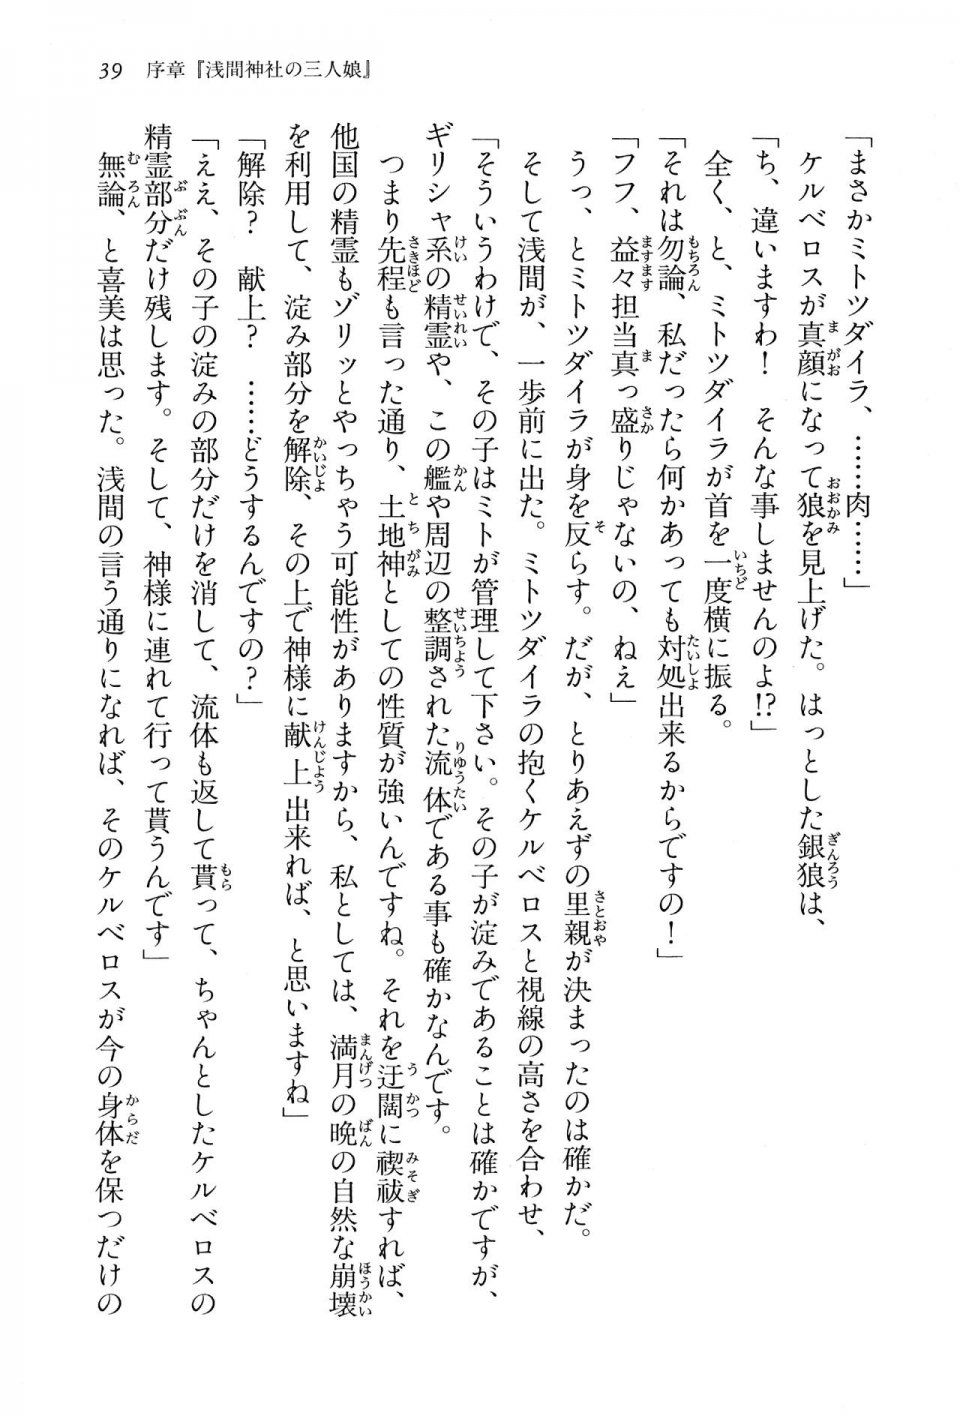 Kyoukai Senjou no Horizon BD Special Mininovel Vol 1(1A) - Photo #43